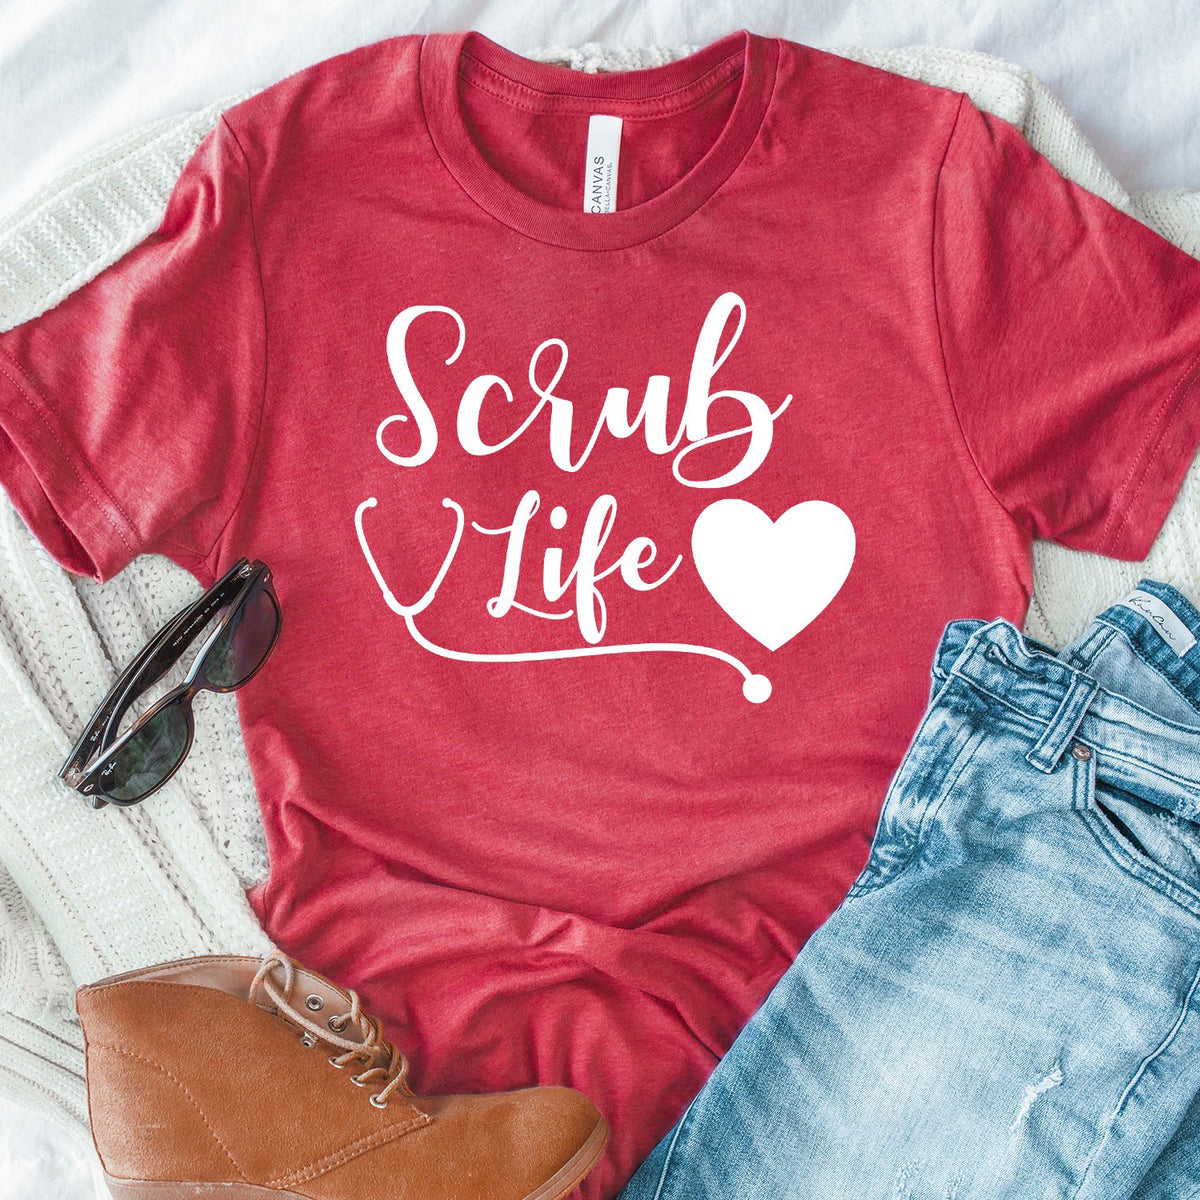 Scrub Life with Stethoscope and Heart - Short Sleeve Tee Shirt